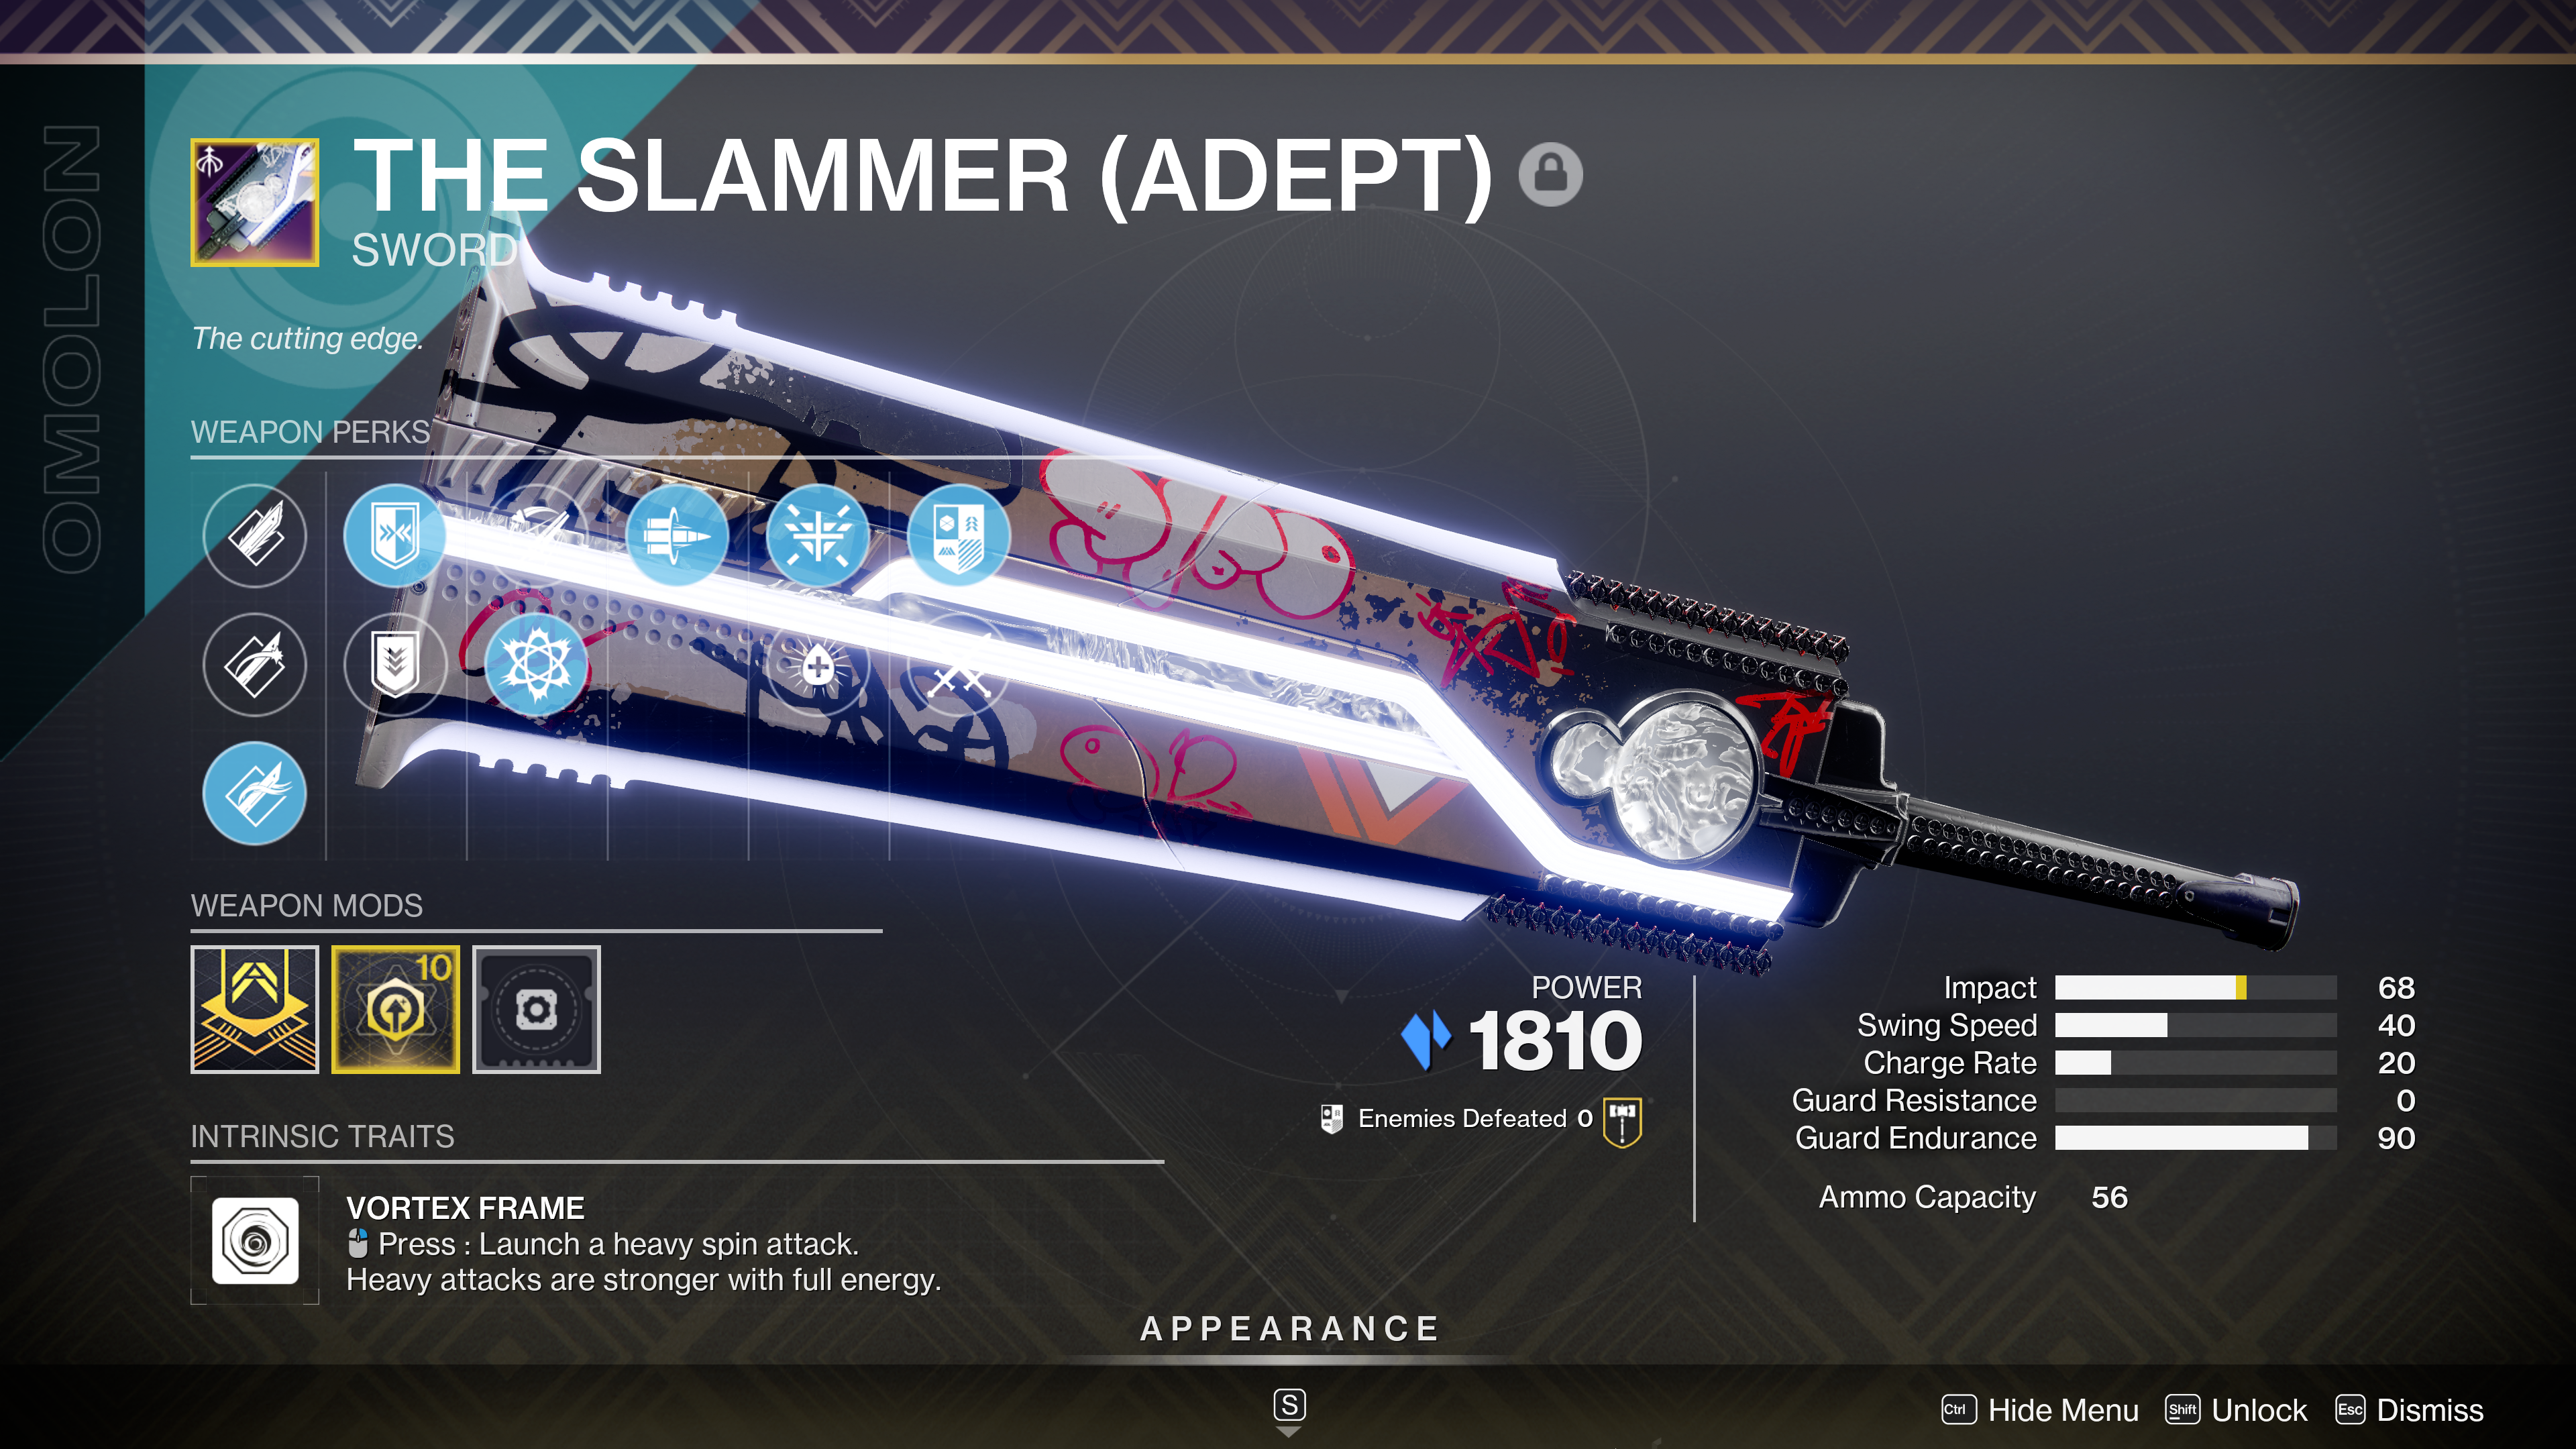 The Slammer (adept) menu in Destiny 2